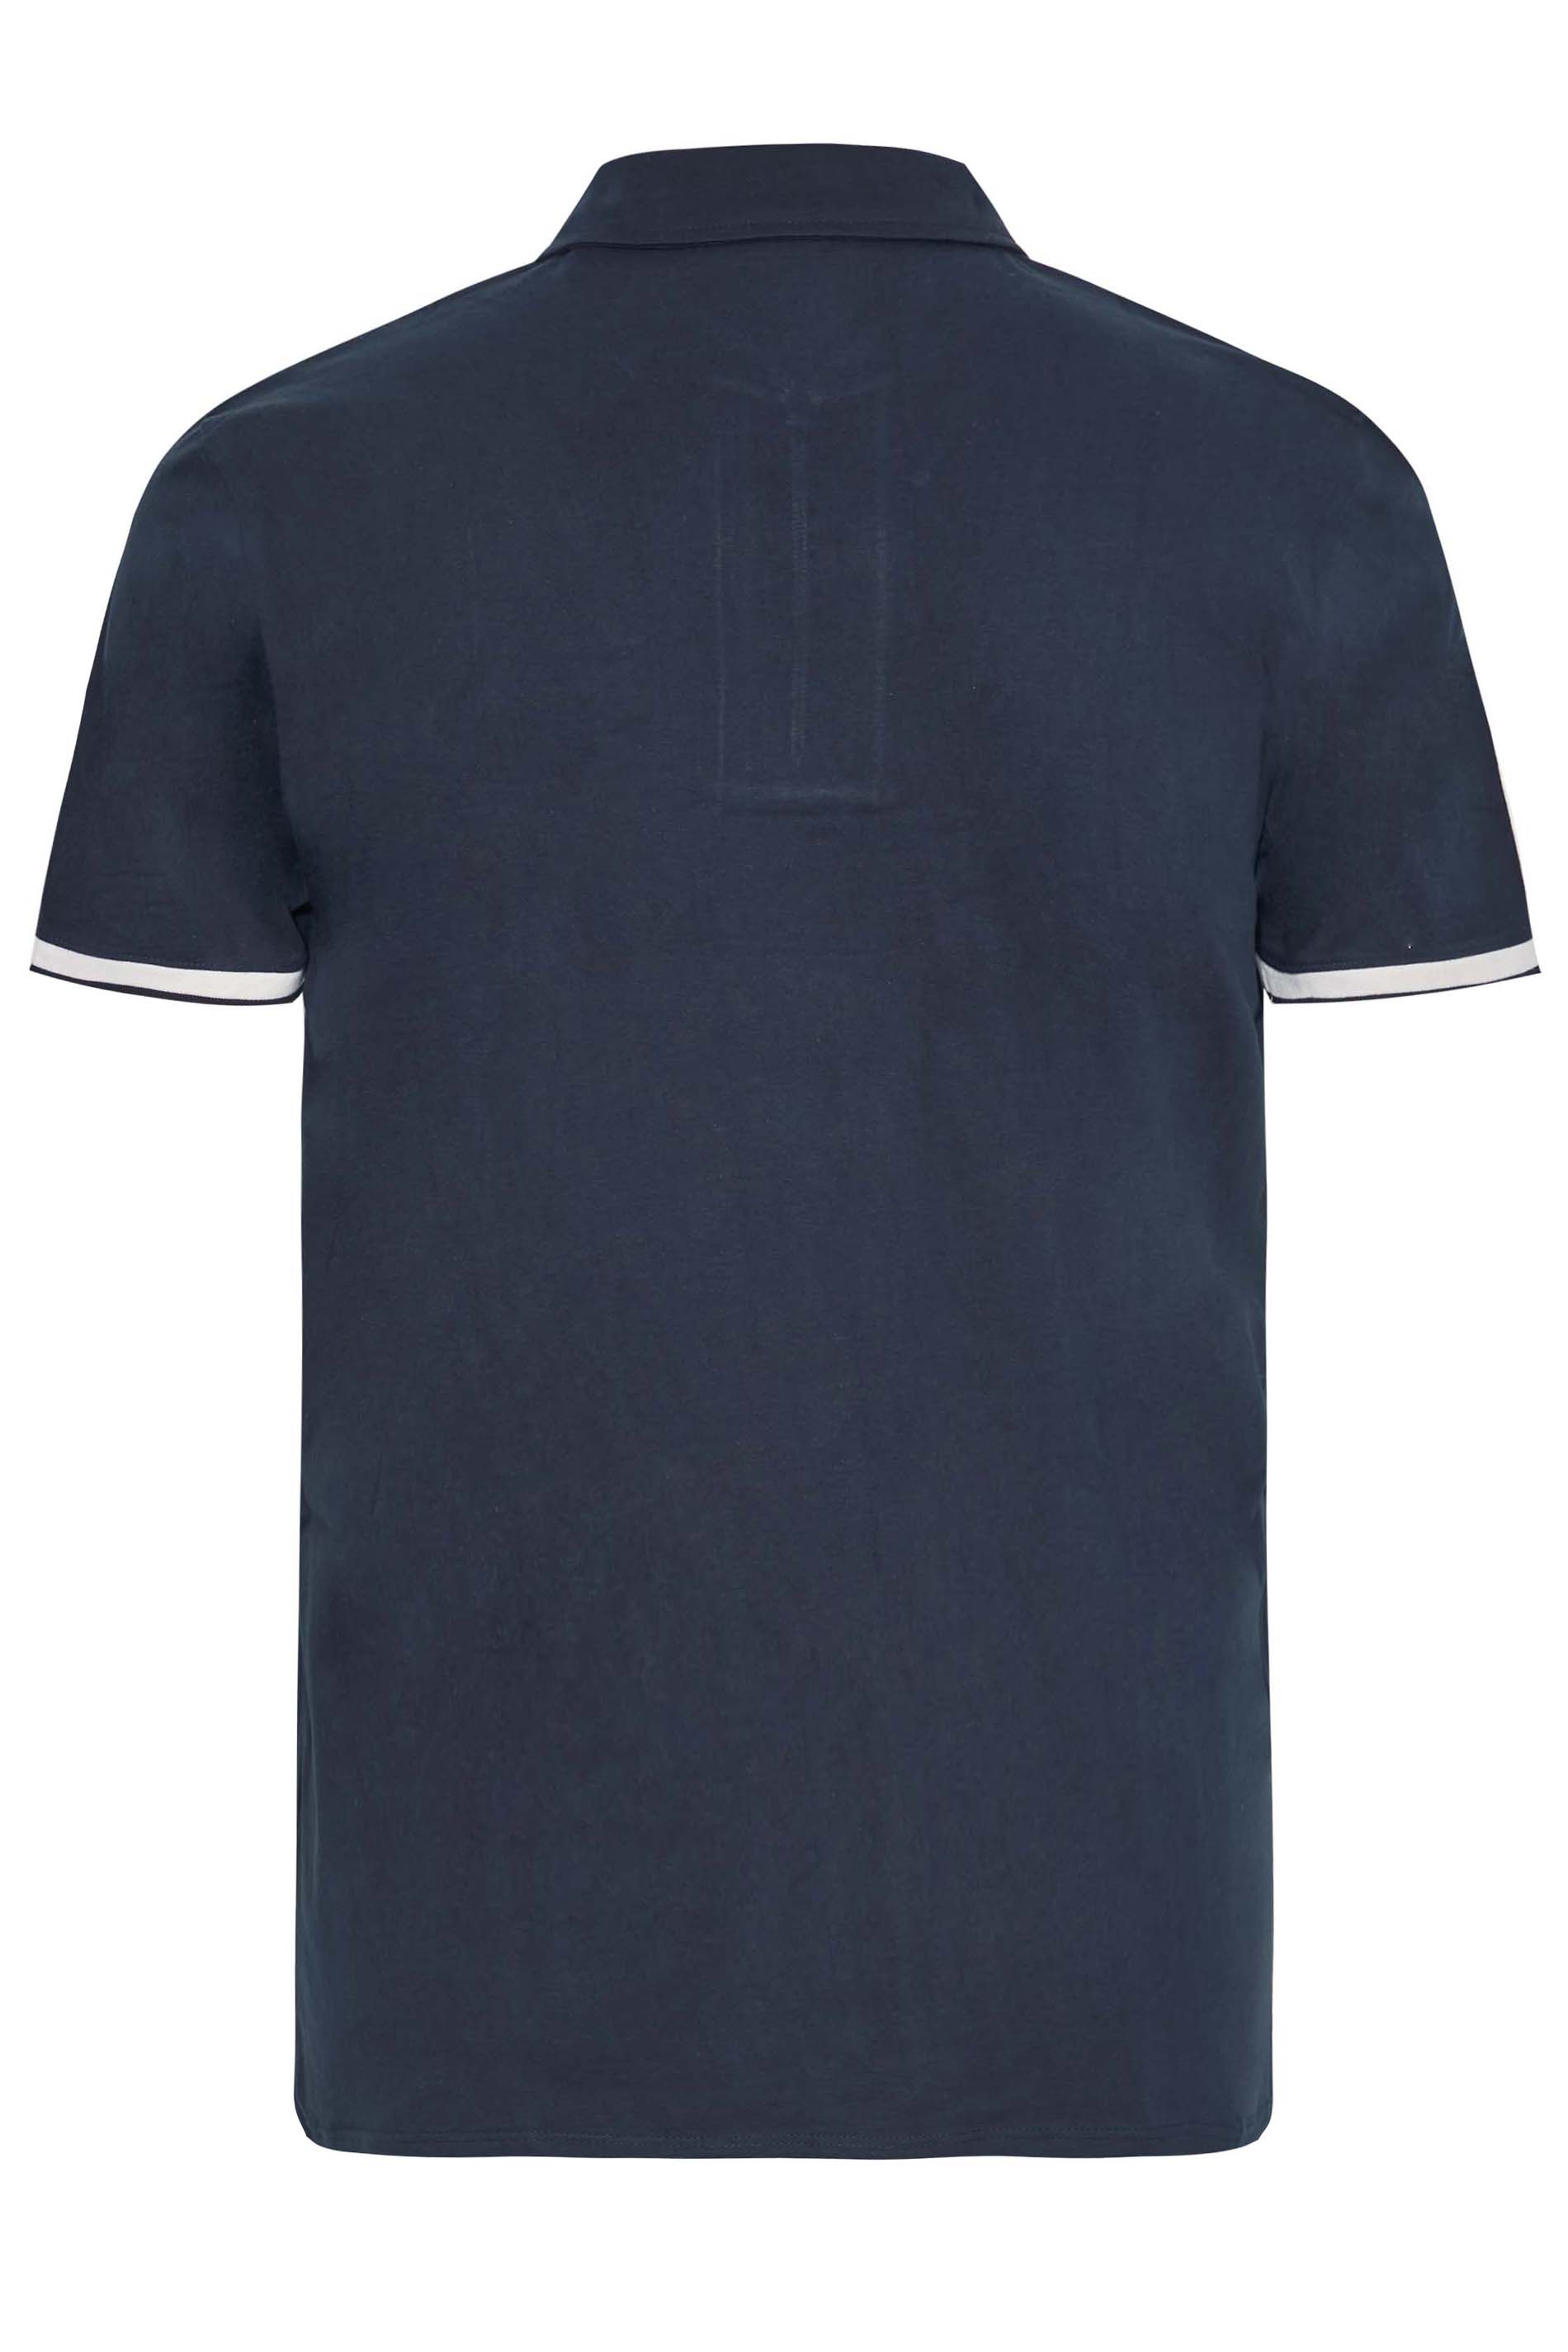 BadRhino Big & Tall Navy Blue Jersey Zip Polo Shirt | BadRhino